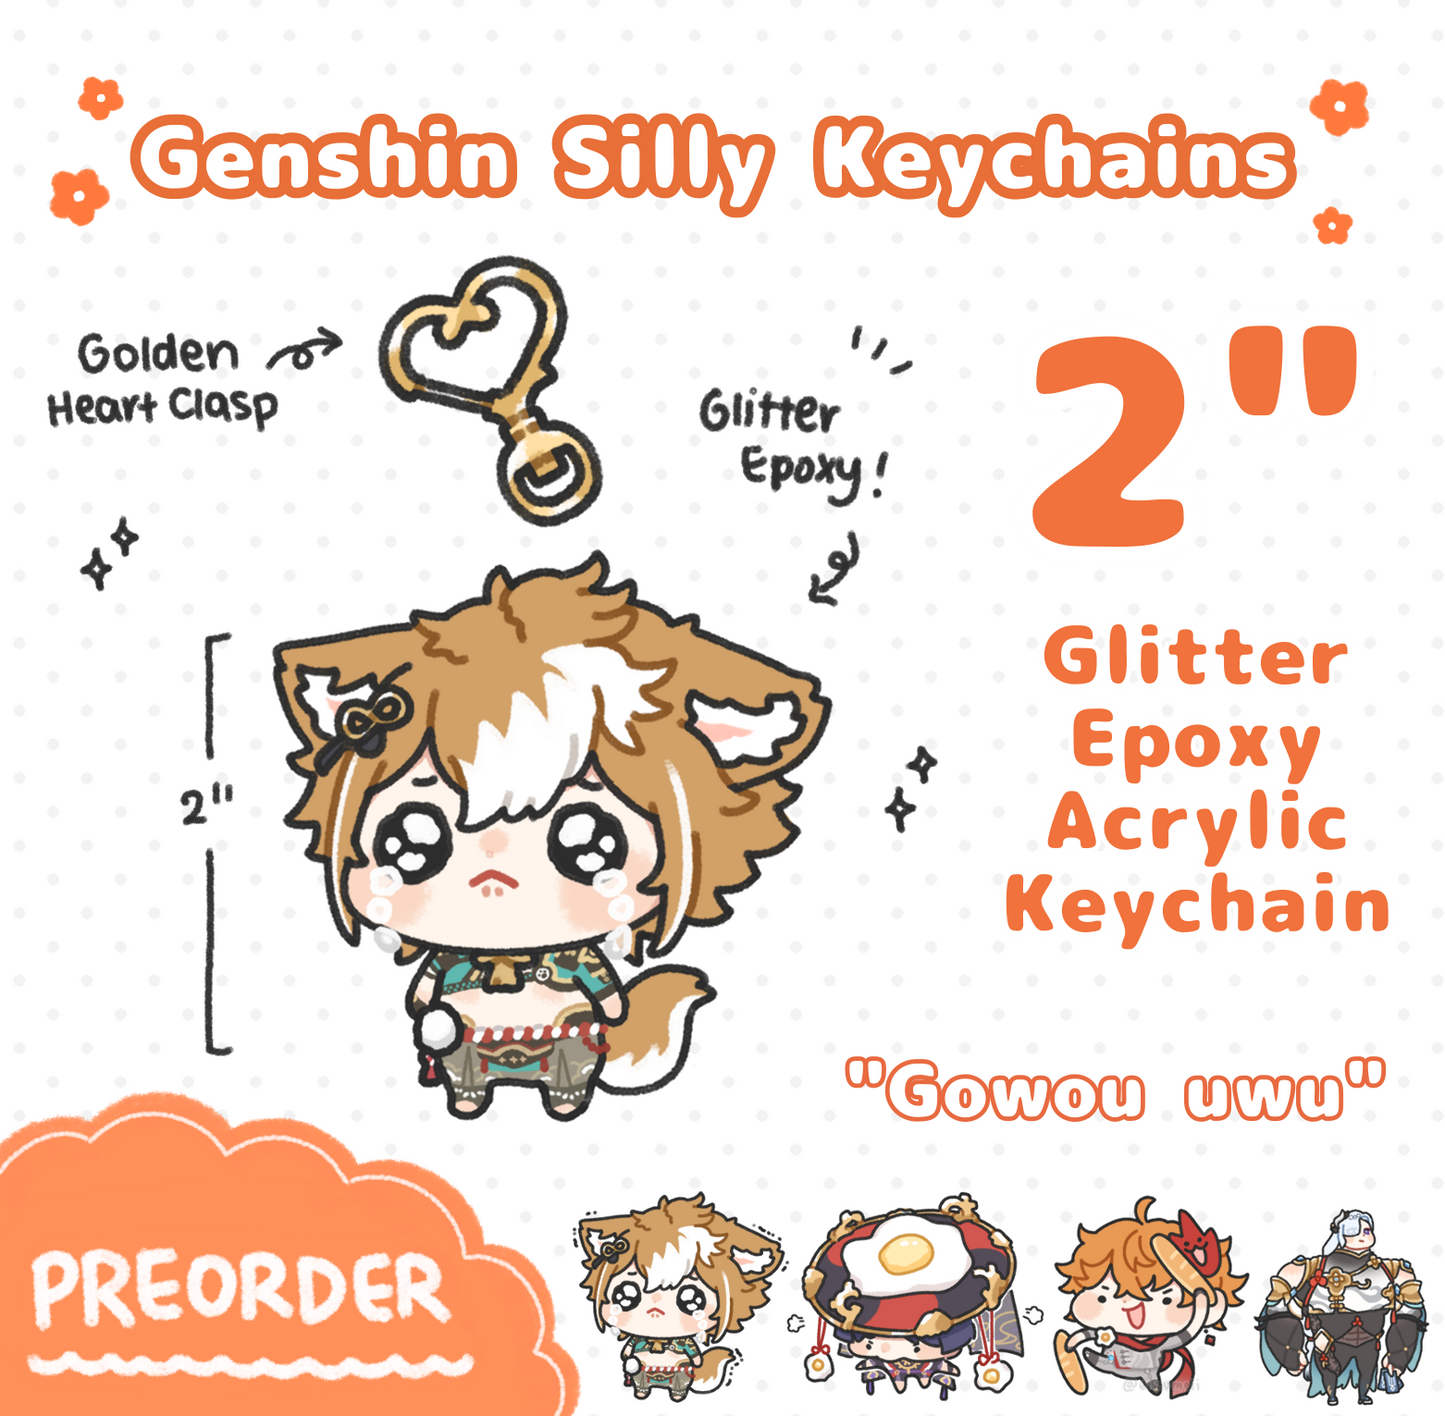 [INSTOCK] Genshin Silly Glitter Epoxy Acrylic Keychains